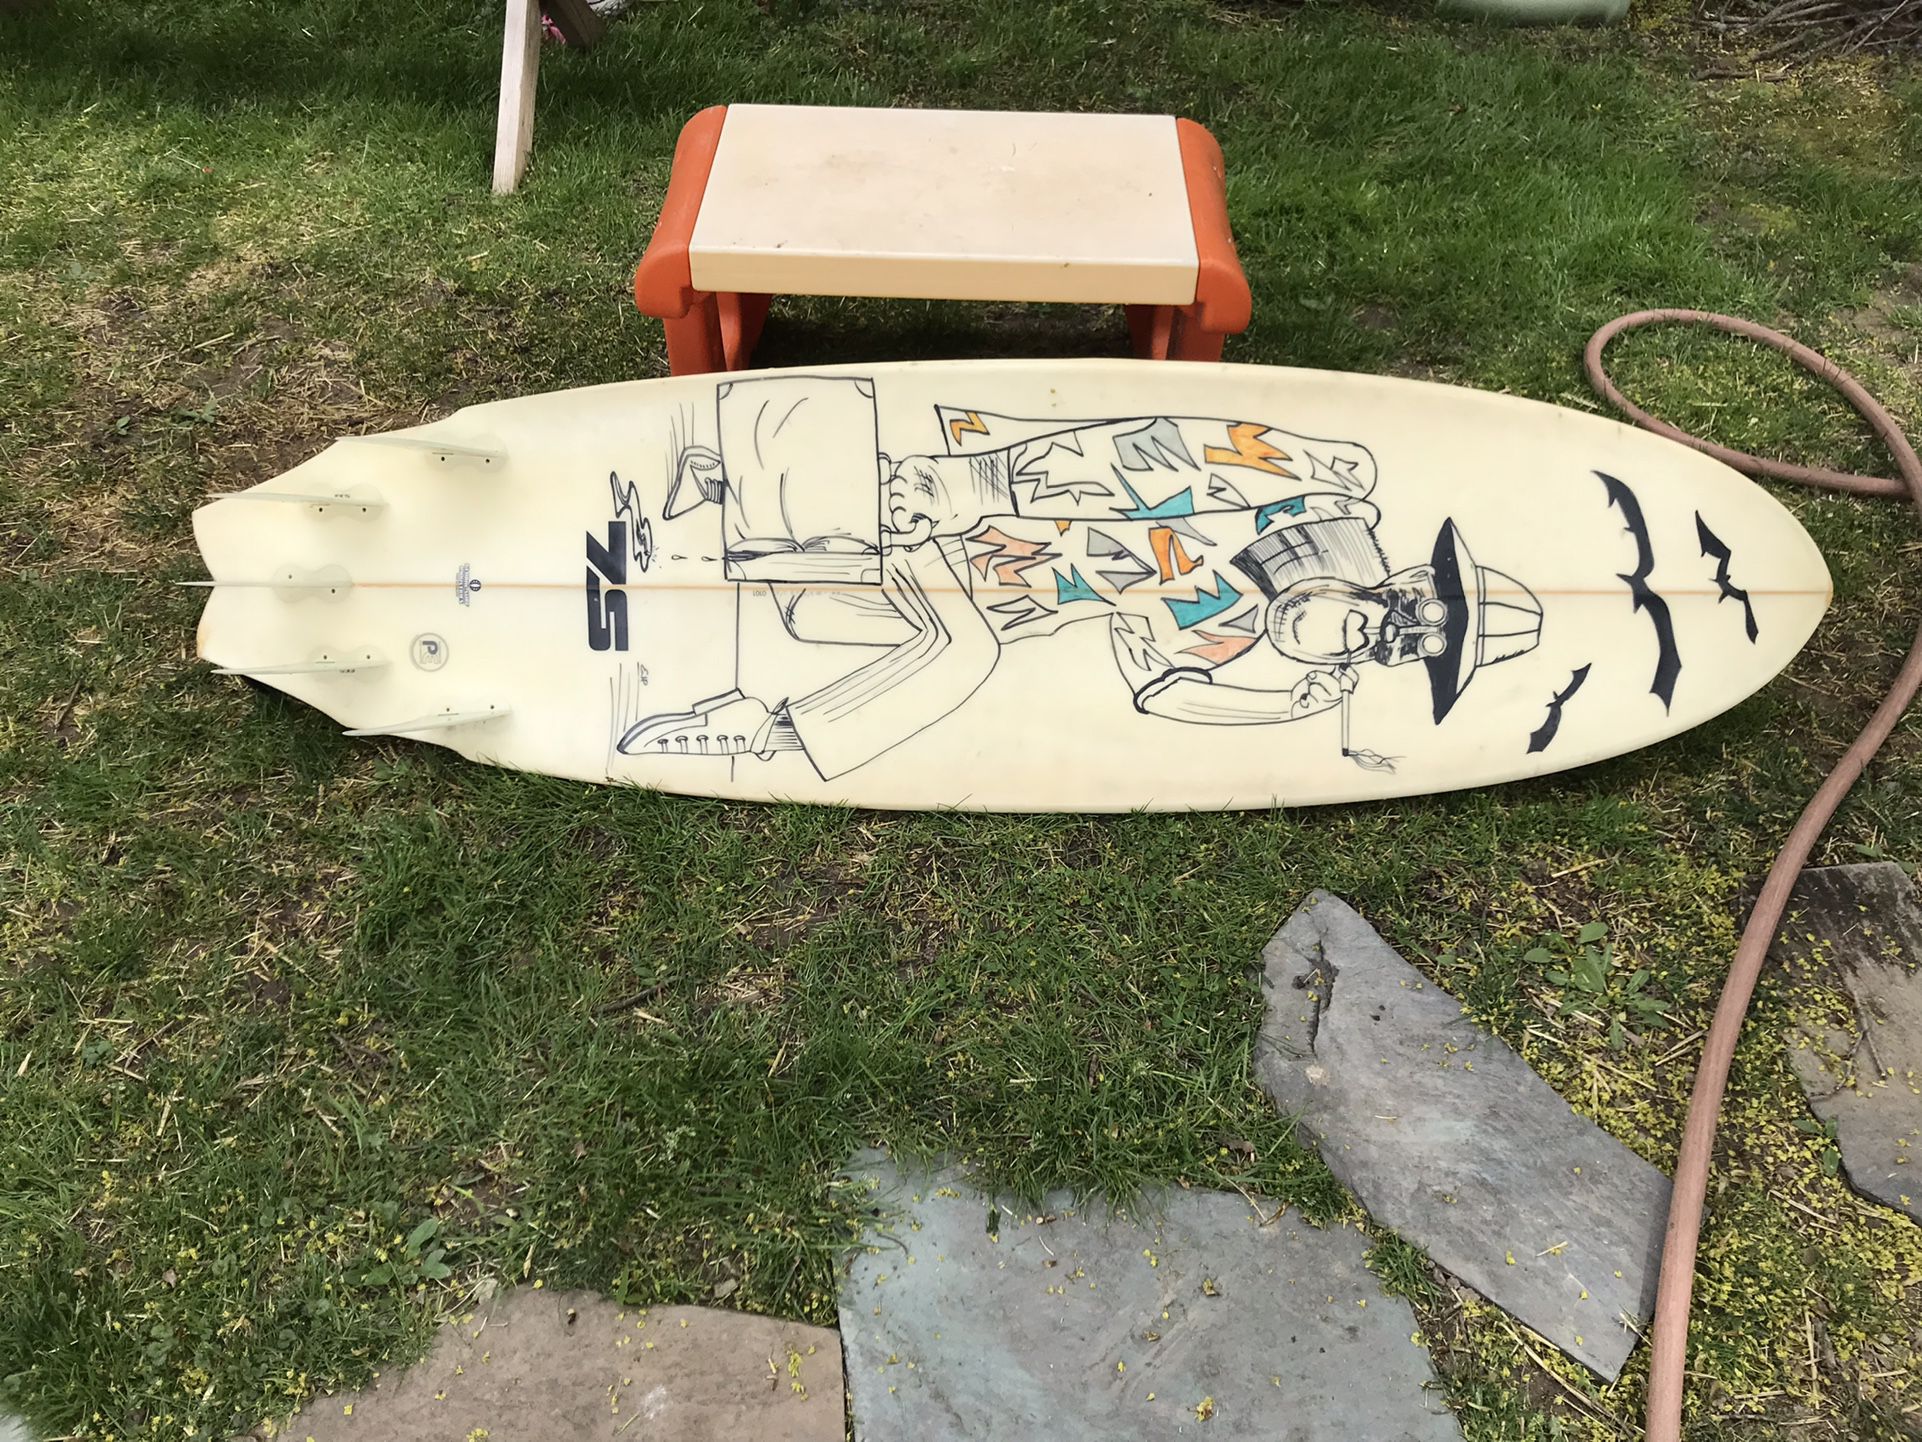 6’6” Superfish II Hybrid Surfboard 